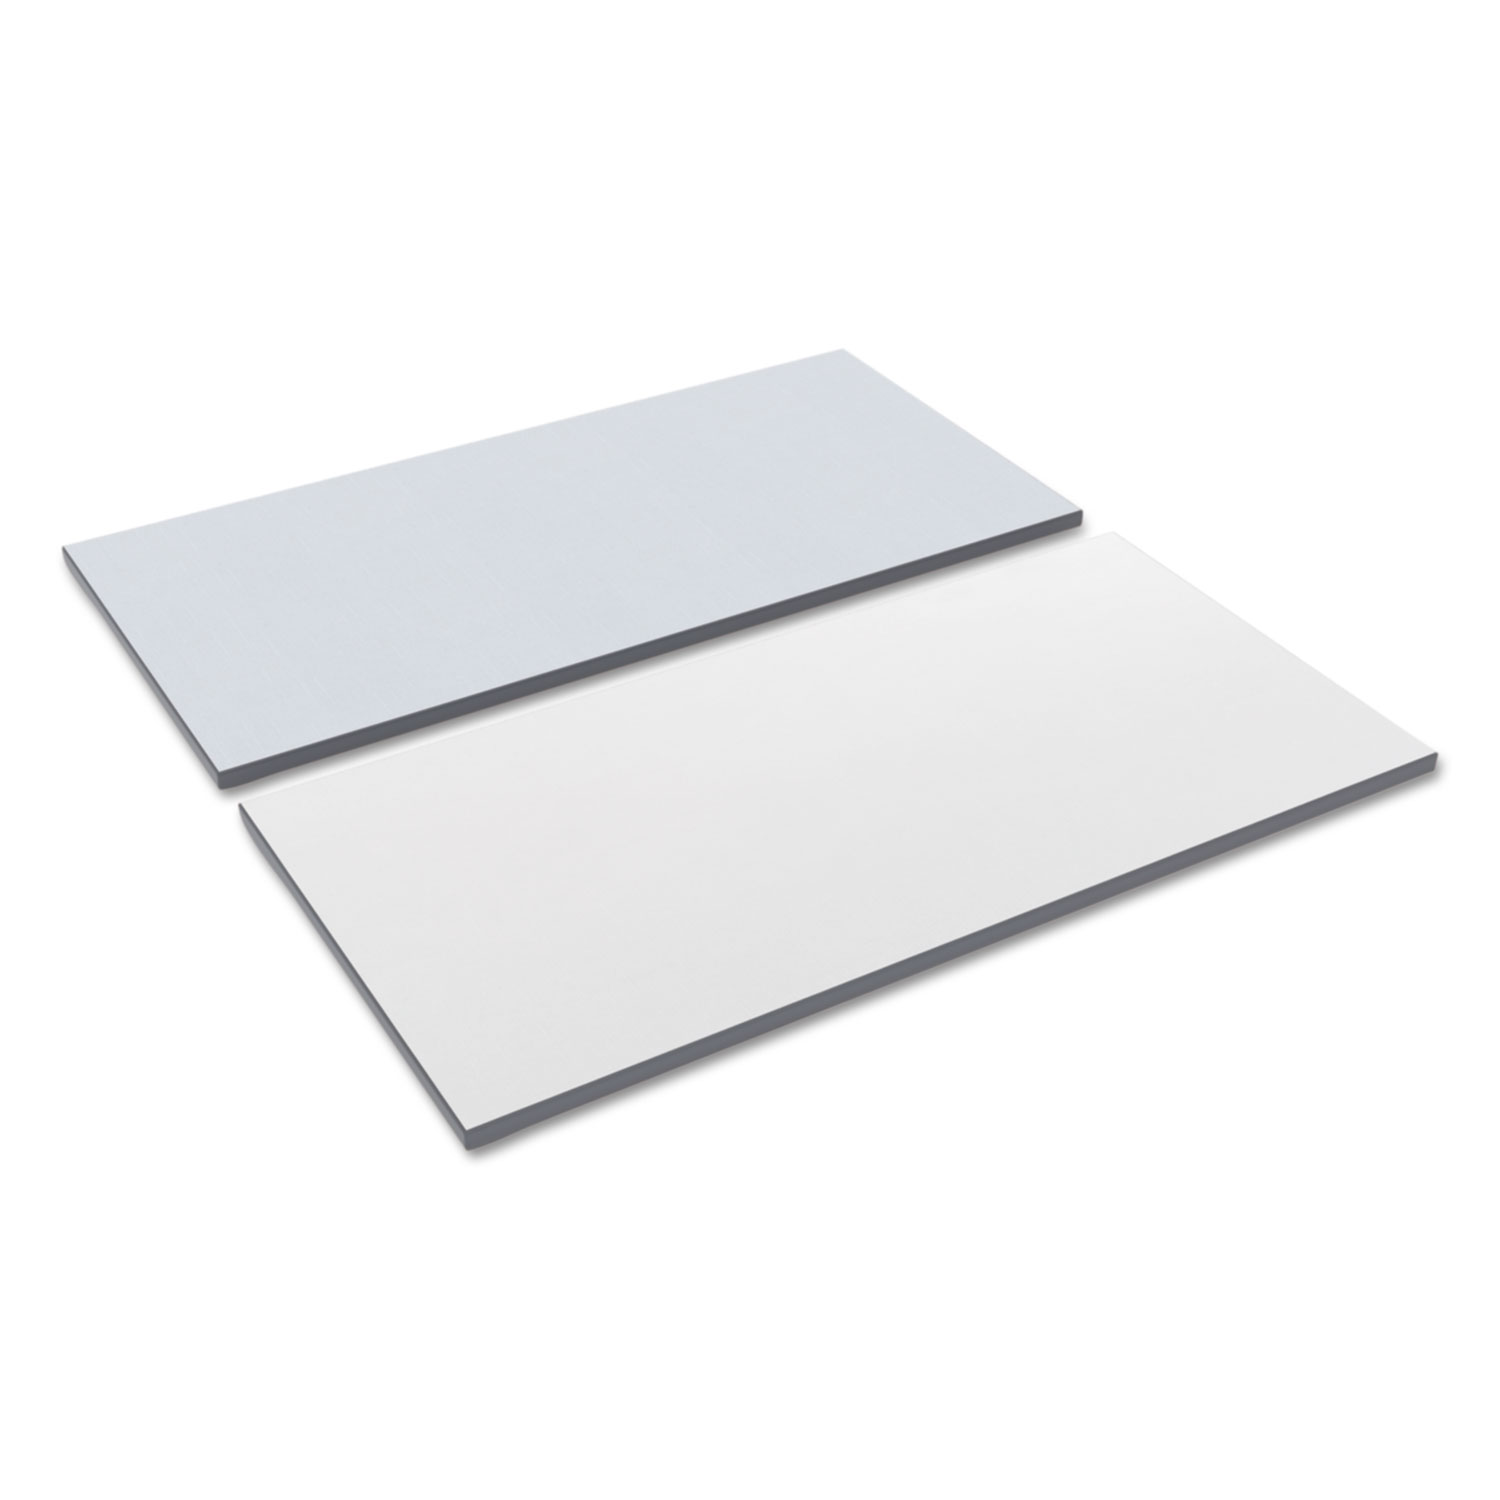  Alera ALETT6024WG Reversible Laminate Table Top, Rectangular, 59 3/8w x 23 5/8d, White/Gray (ALETT6024WG) 